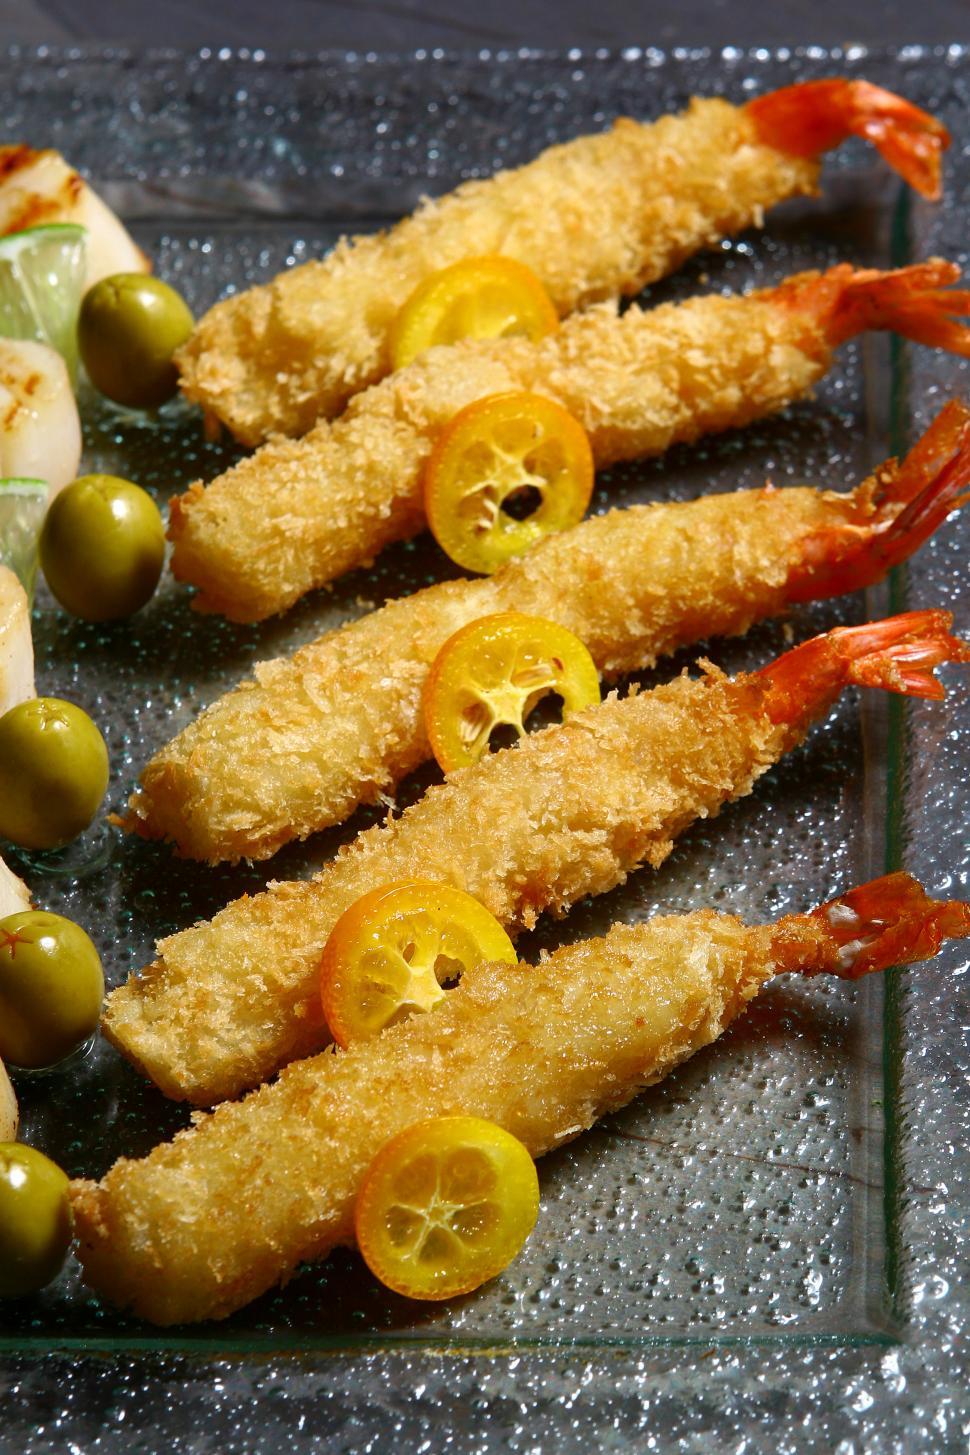 Free Image of Breaded fried shrimp 